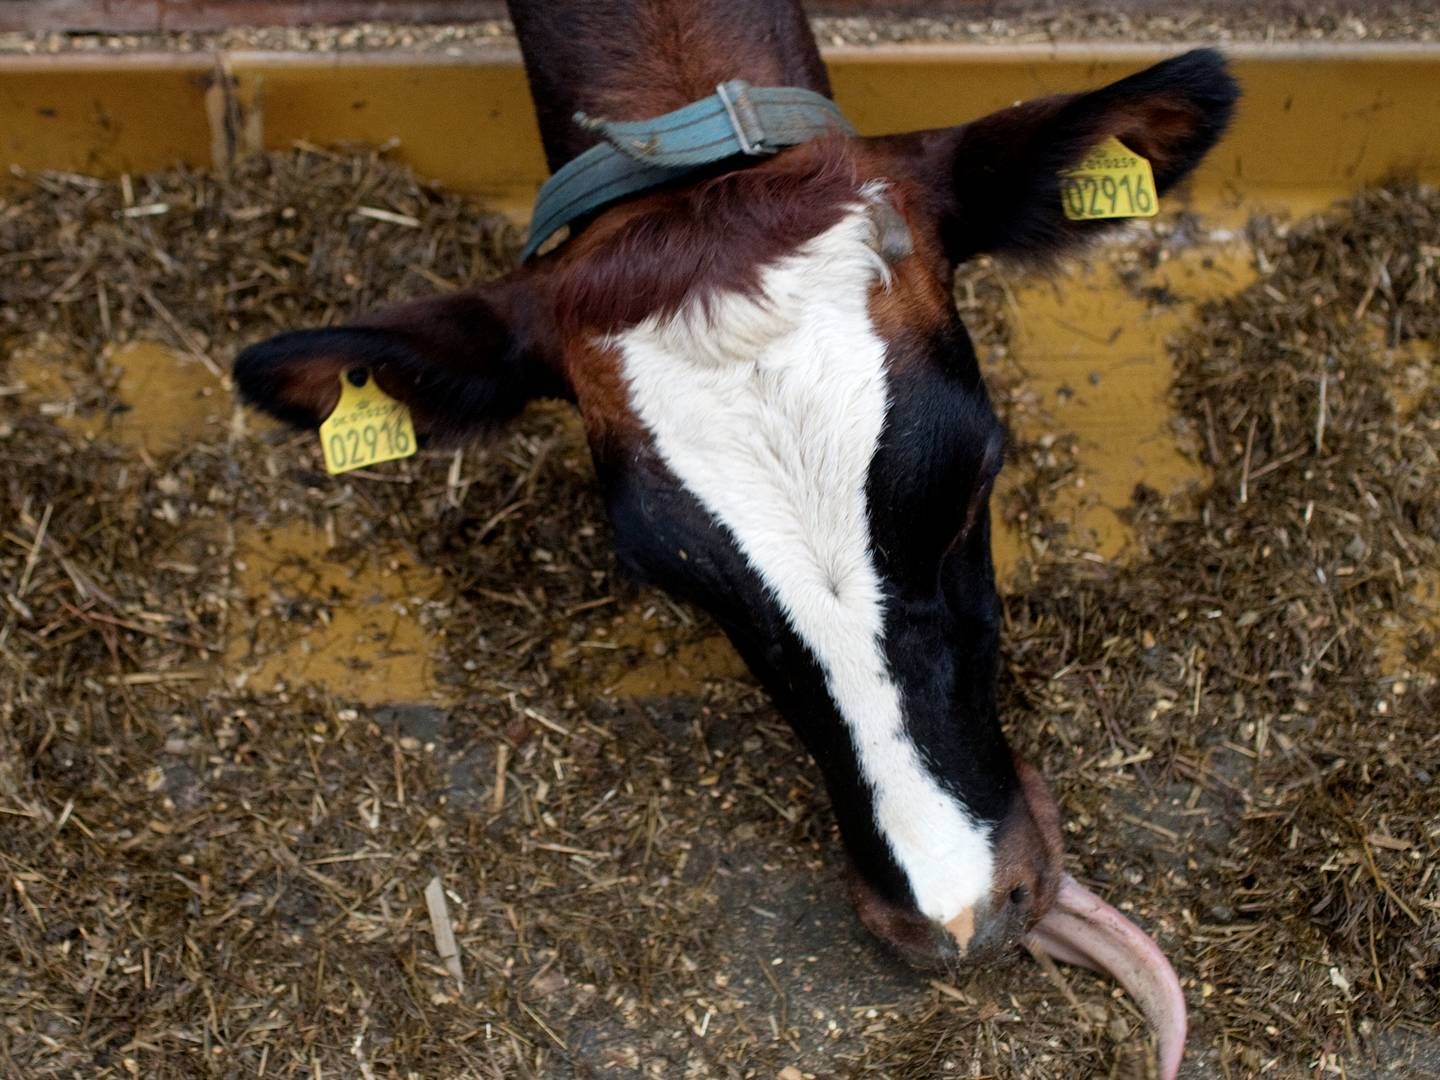 Sygdommen bluetongue smitter ikke mennesker, men kan være dødelig for drøvtyggere, eksempelvis kvæg og får. | Foto: Peter Hove Olesen